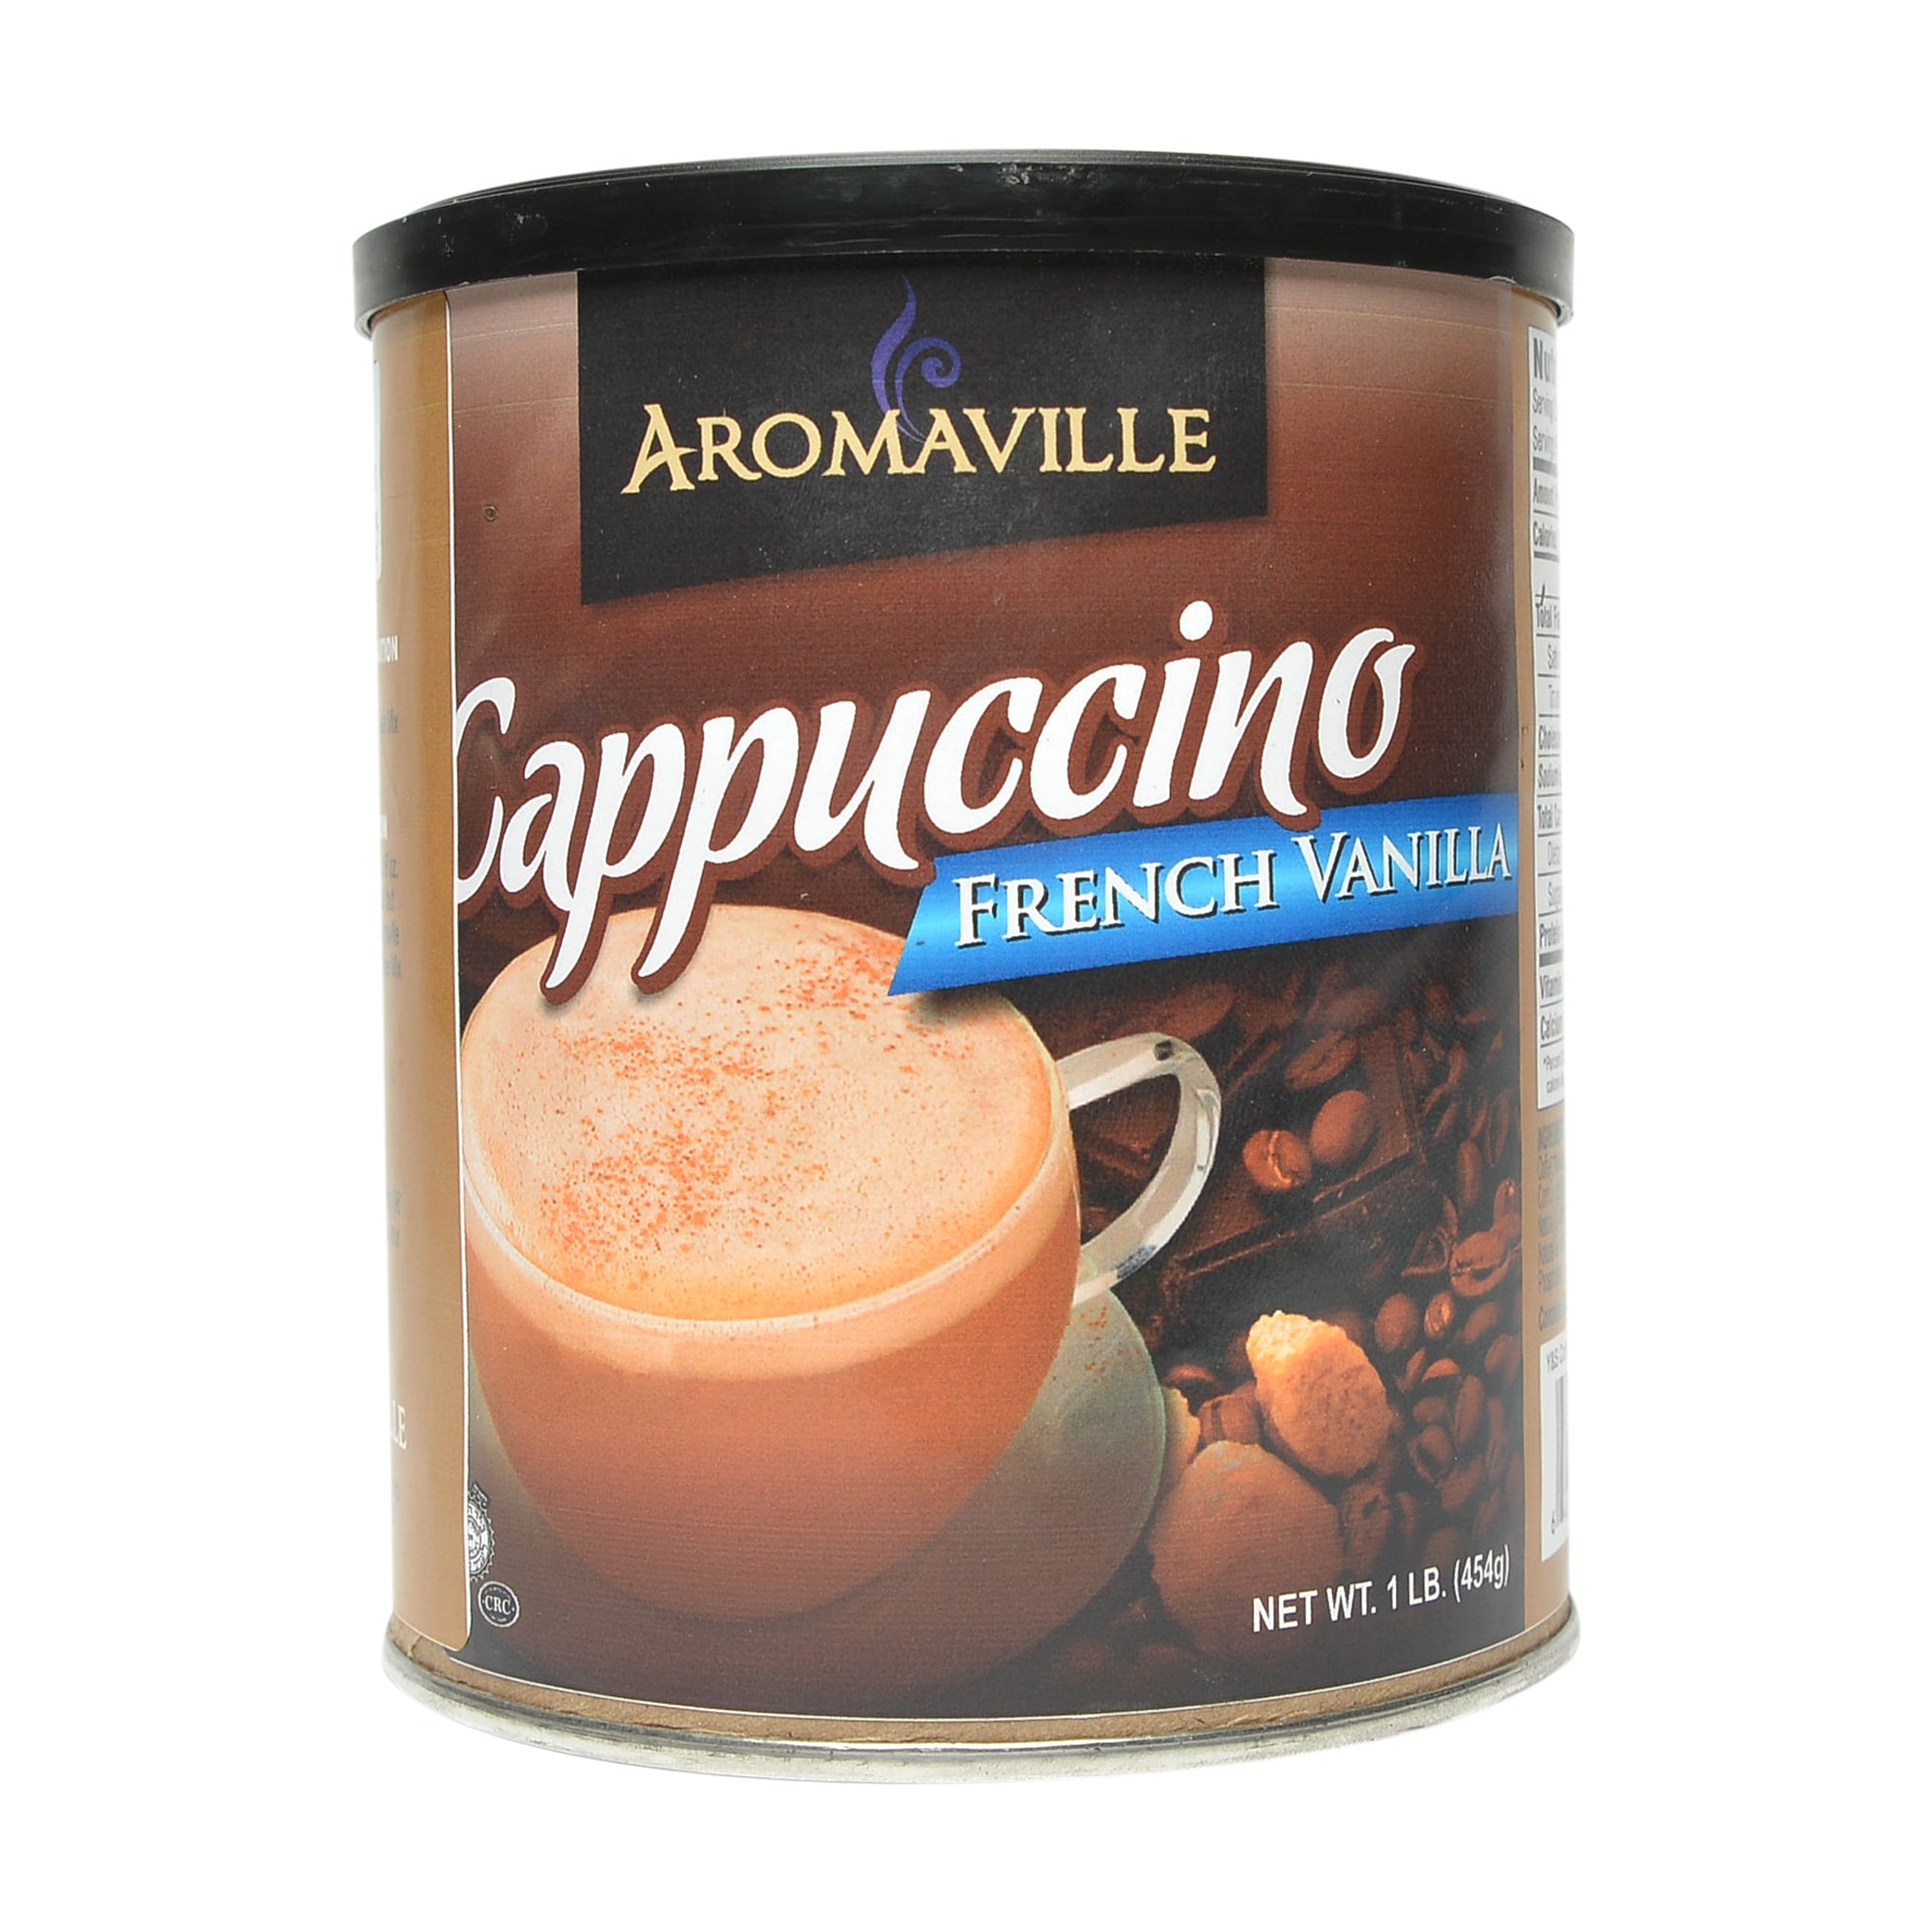 Cappuccino Powder Mix